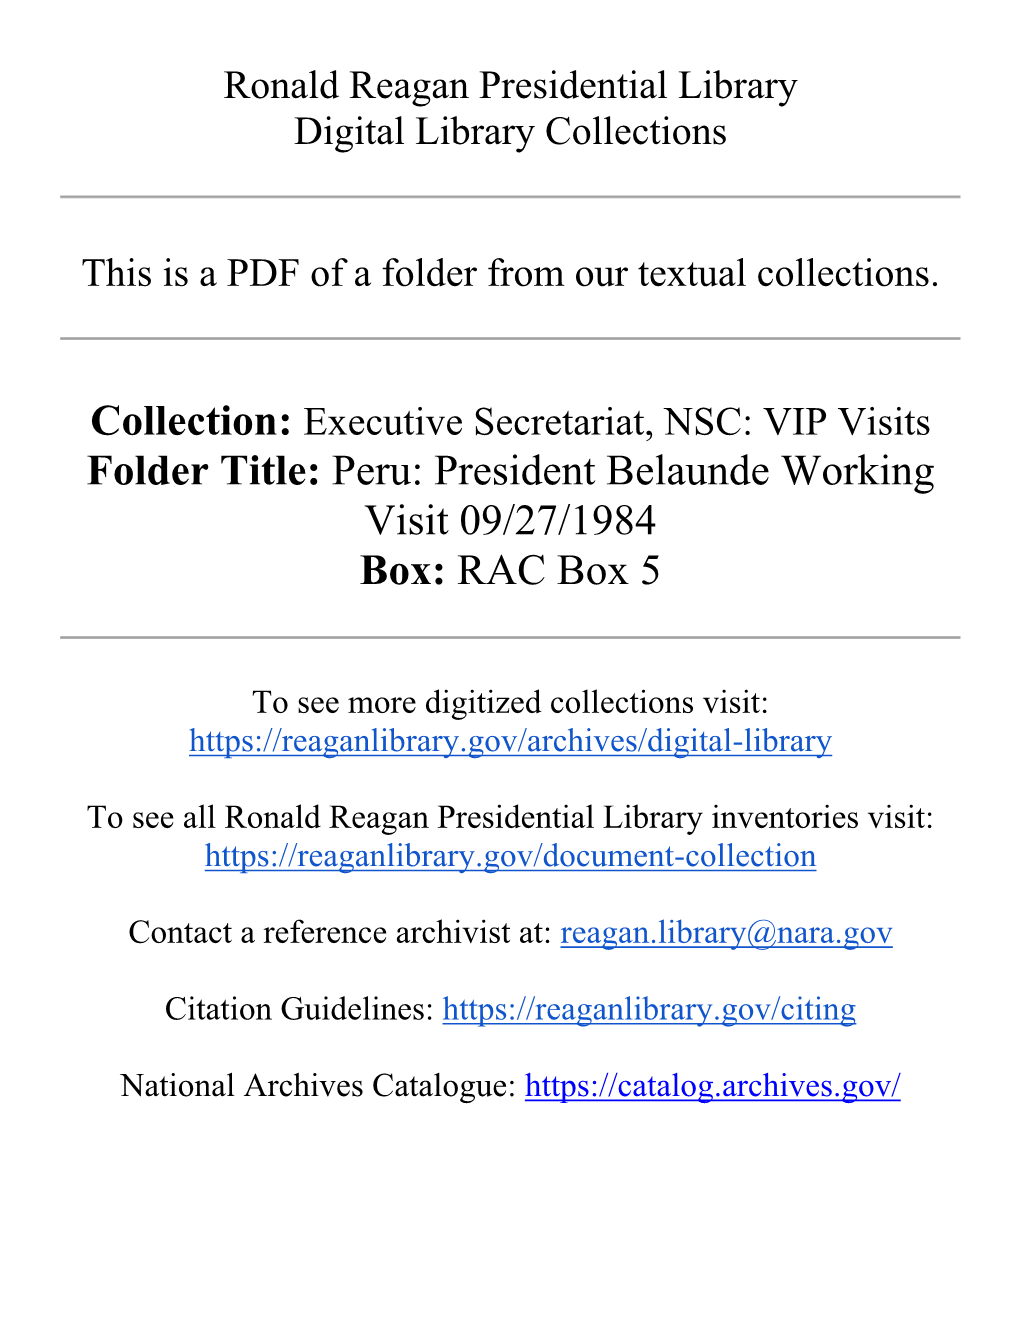 Folder Title: Peru: President Belaunde Working Visit 09/27/1984 Box: RAC Box 5